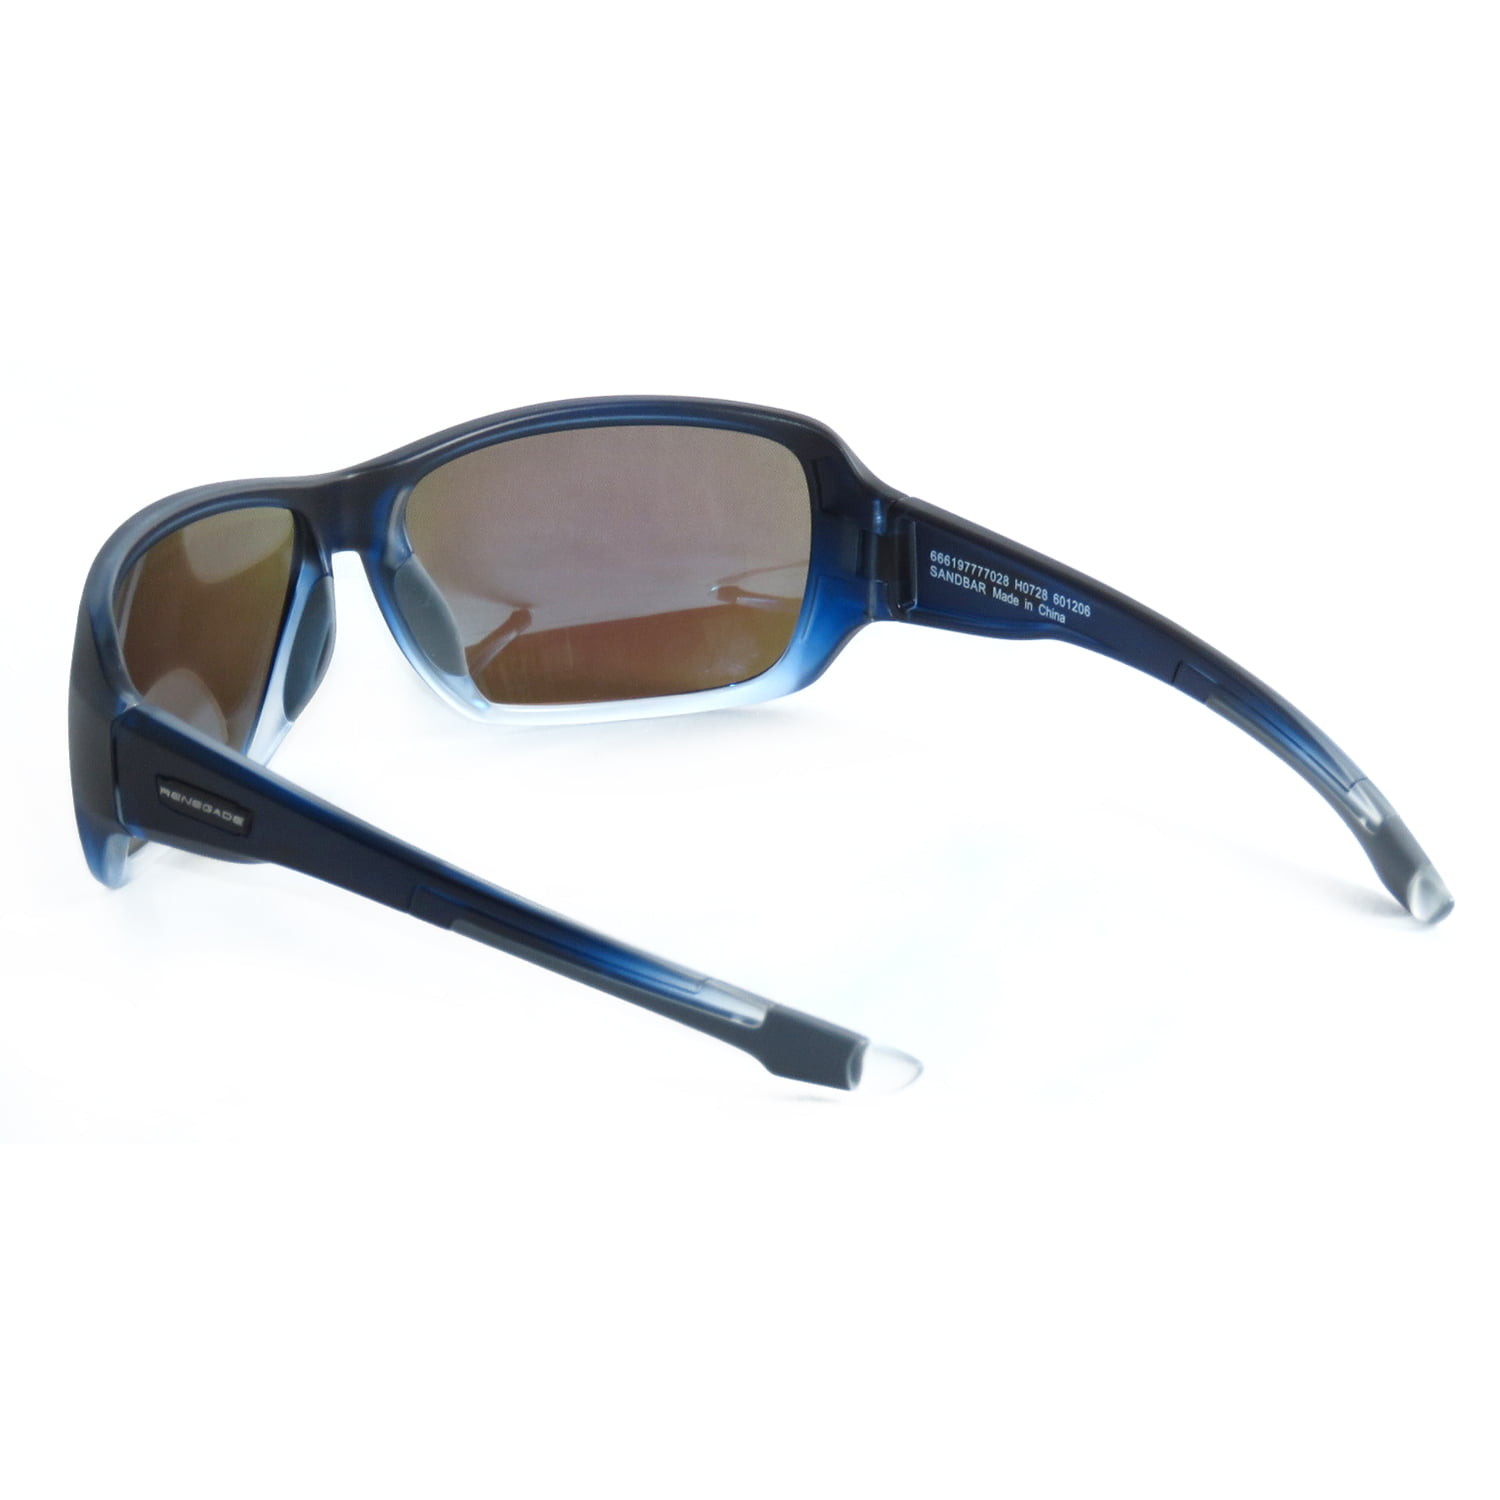 Discover 157+ maui jim sandbar sunglasses latest